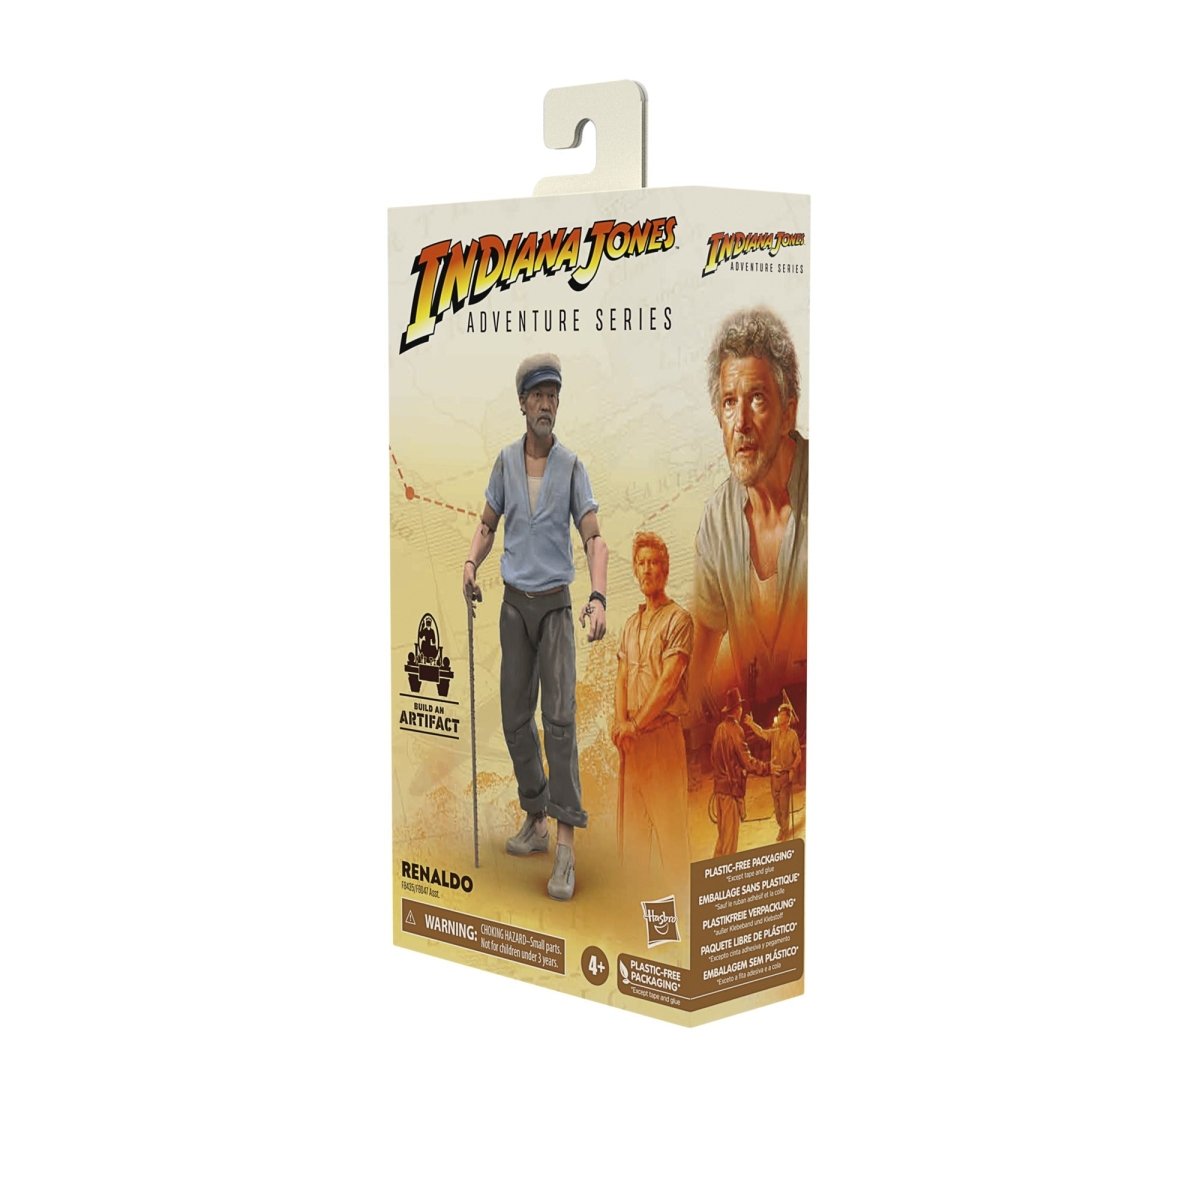 Renaldo-Indiana Jones Adventure Series6-Inch Action Figure Pop-O-Loco